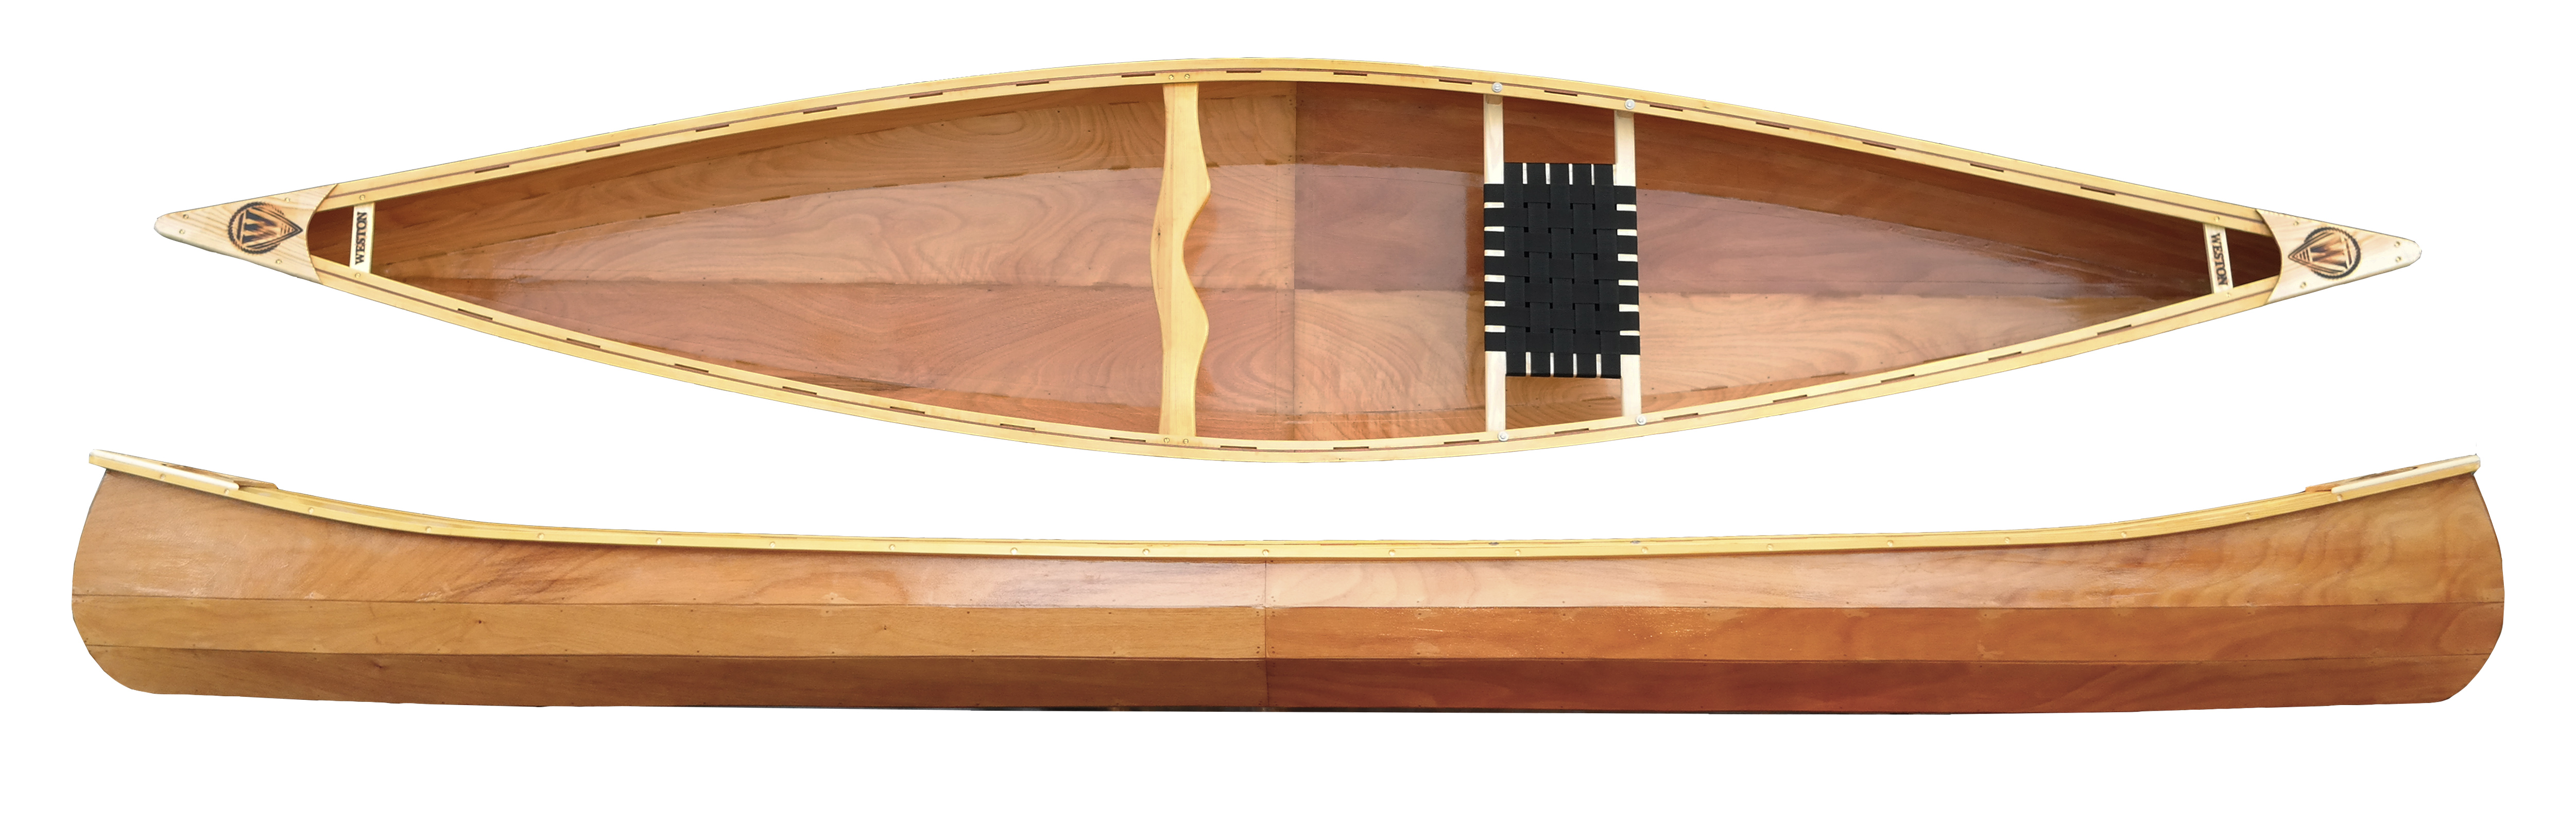 Weston 140 – Wooden canoes – Handmade in Norfolk